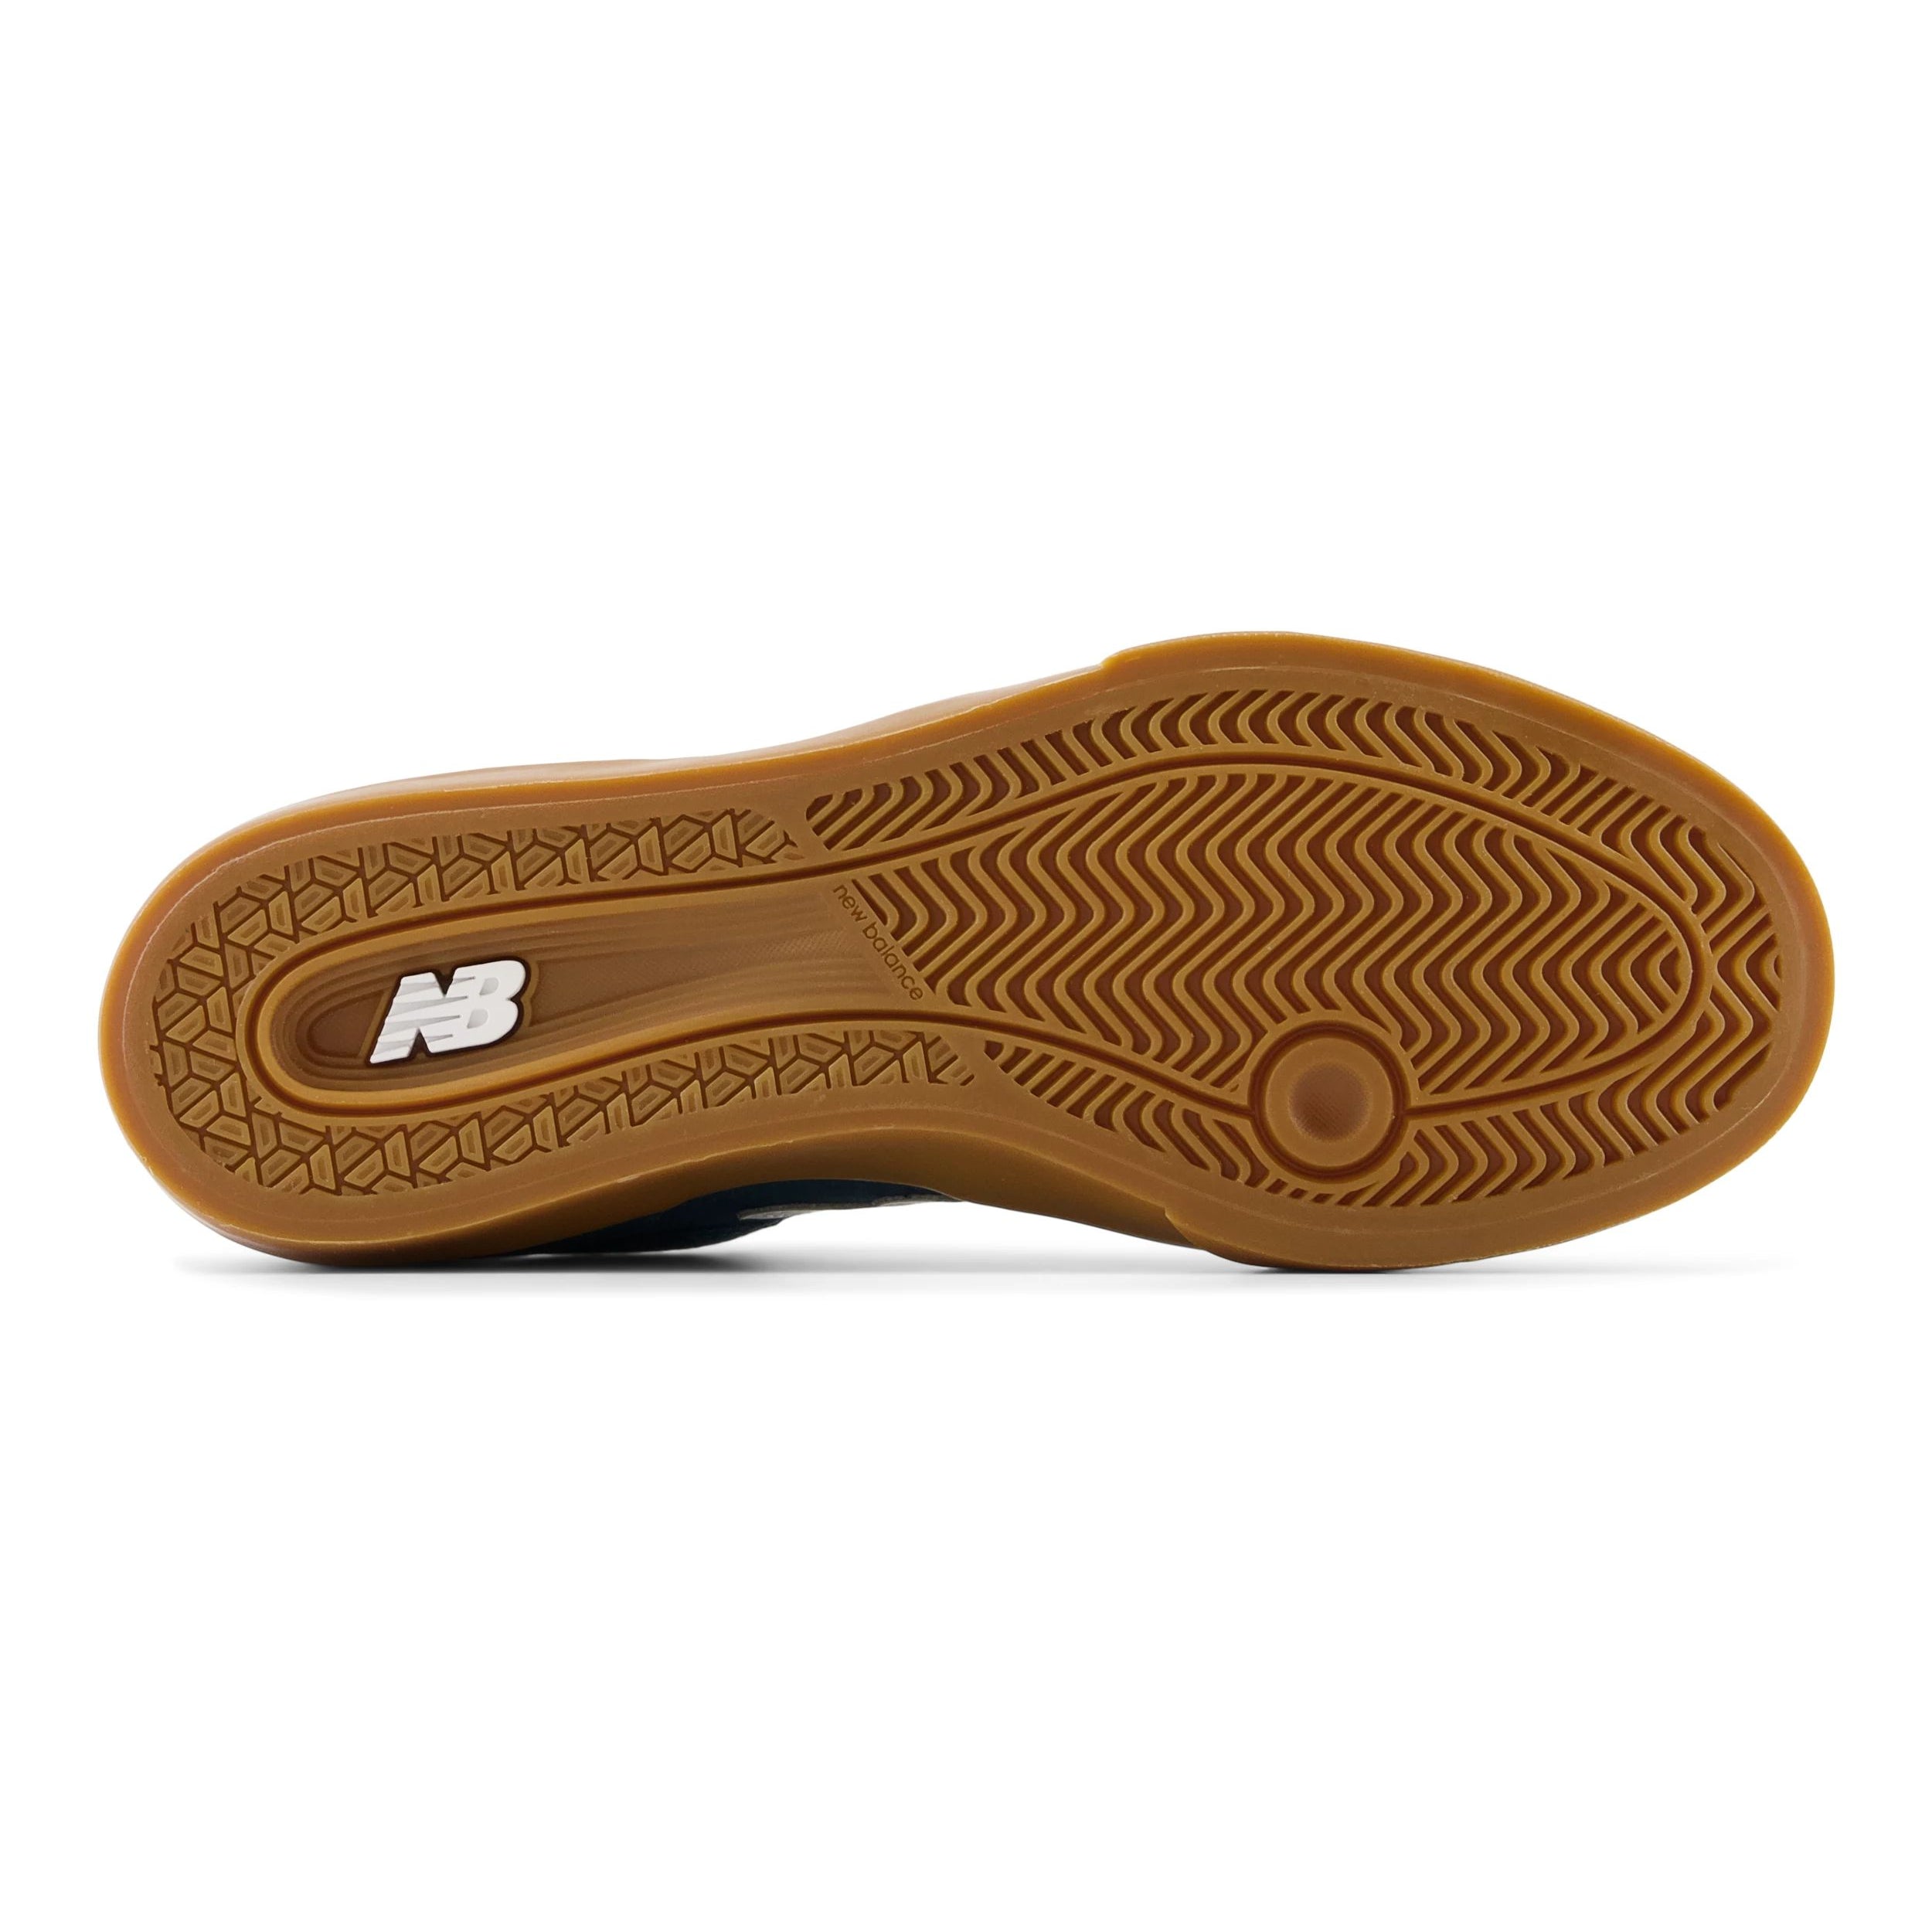 Vintage Teal NM272 NB Numeric Skate Shoe Bottom